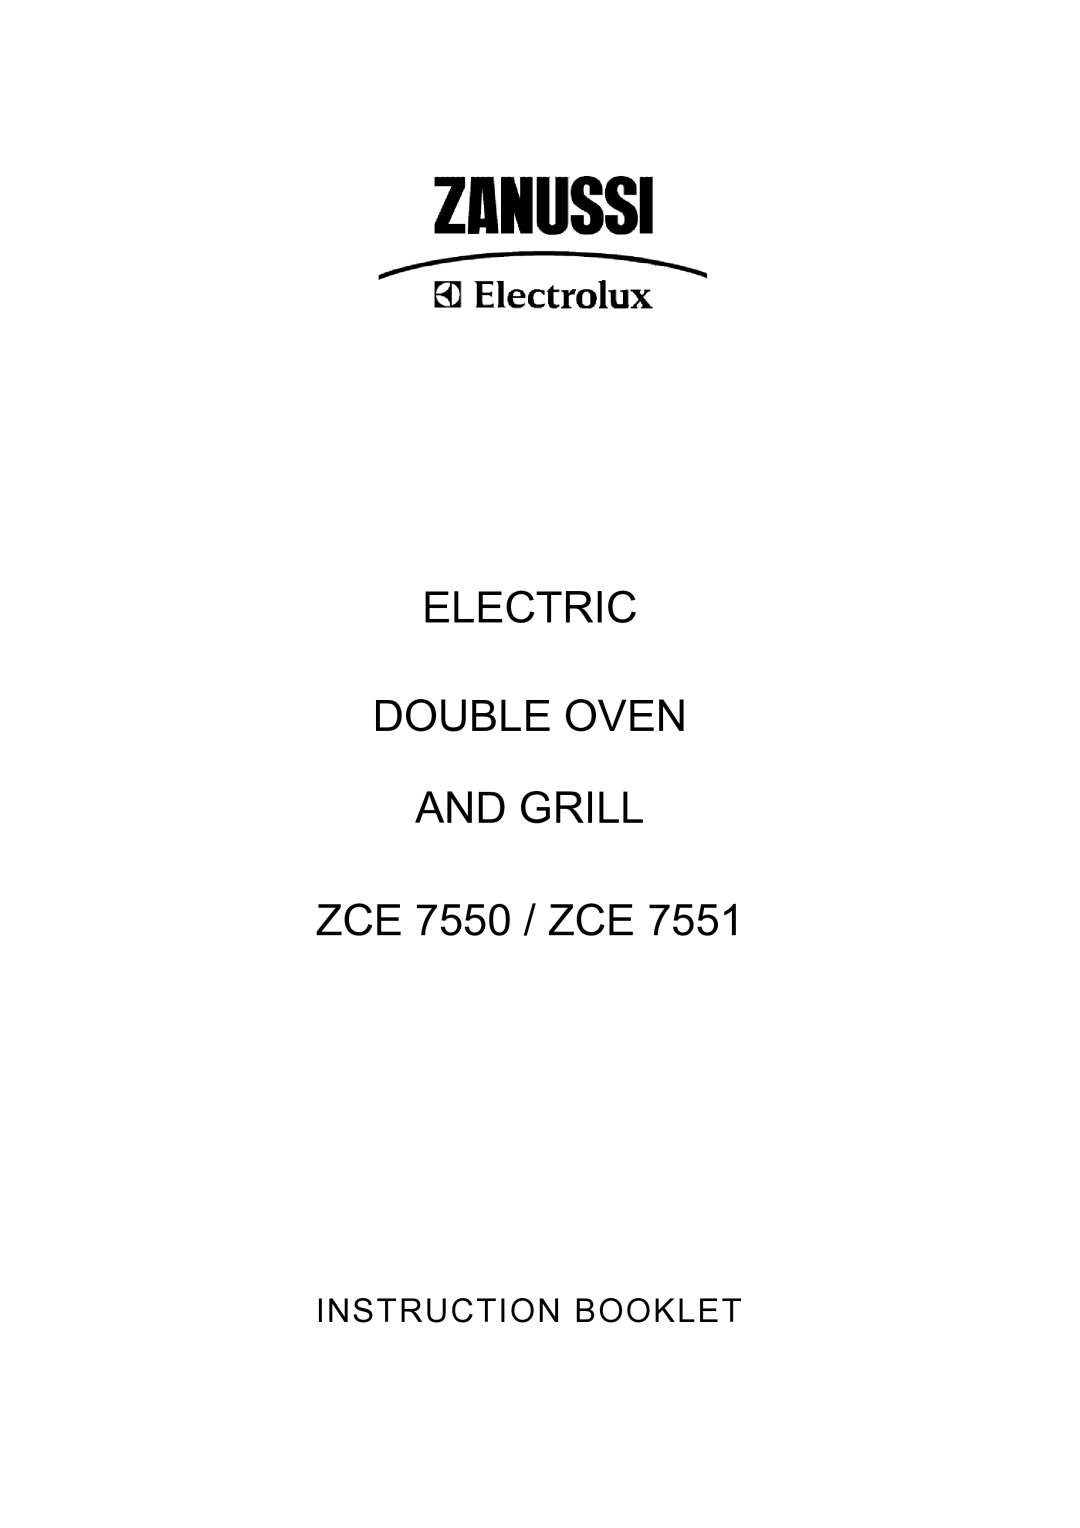 Zanussi ZCE 7551, ZCE 7550 manual Electric Double Oven Grill 